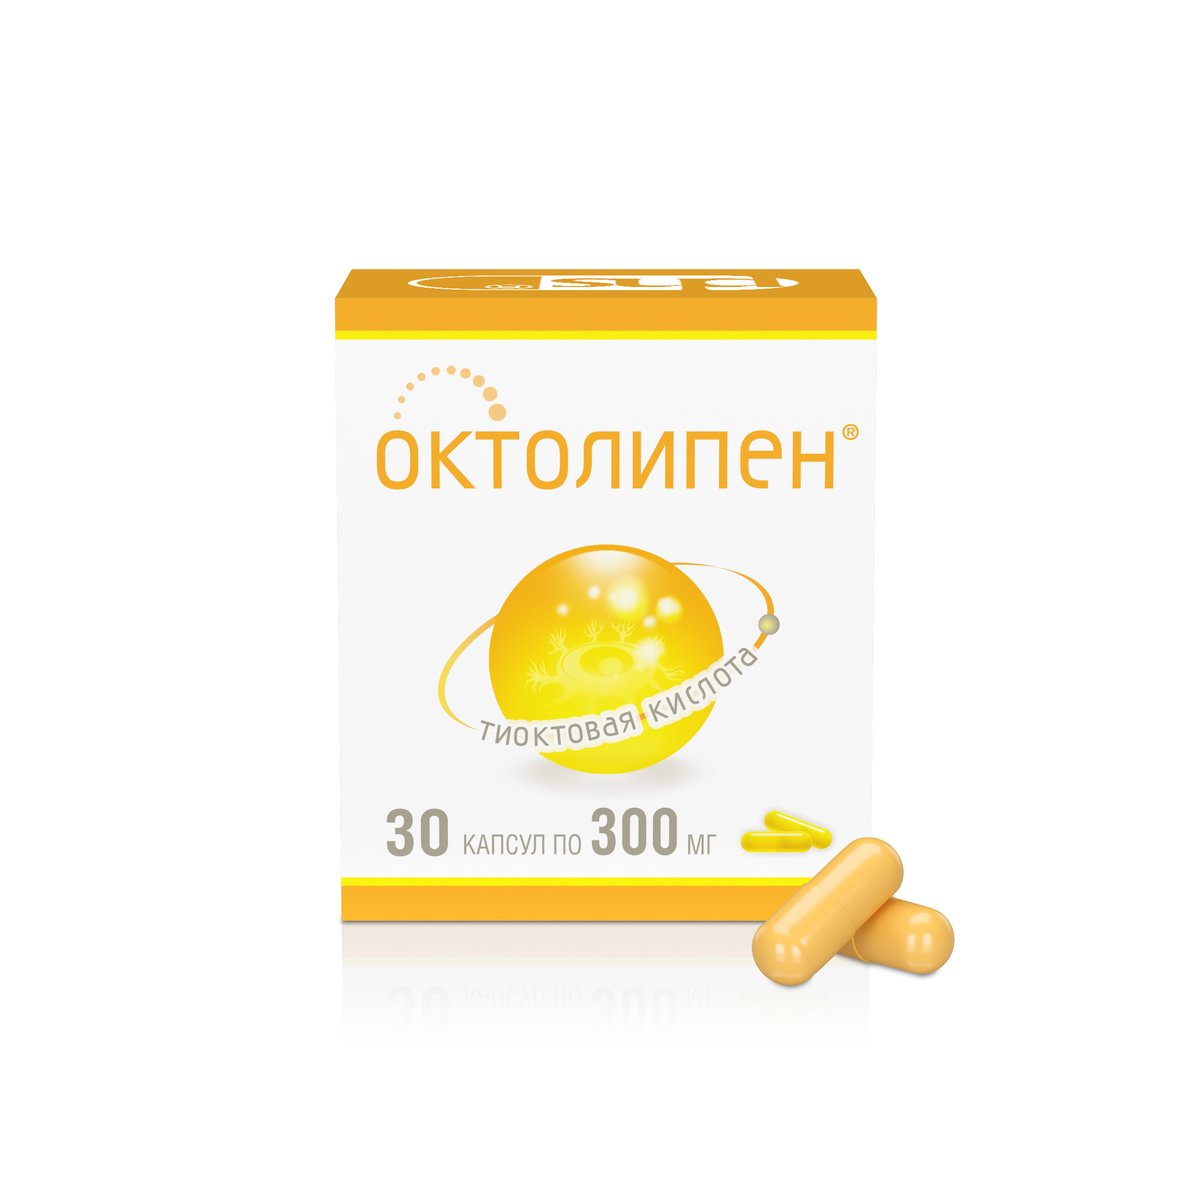 Октолипен капсулы 300 мг 30 шт.